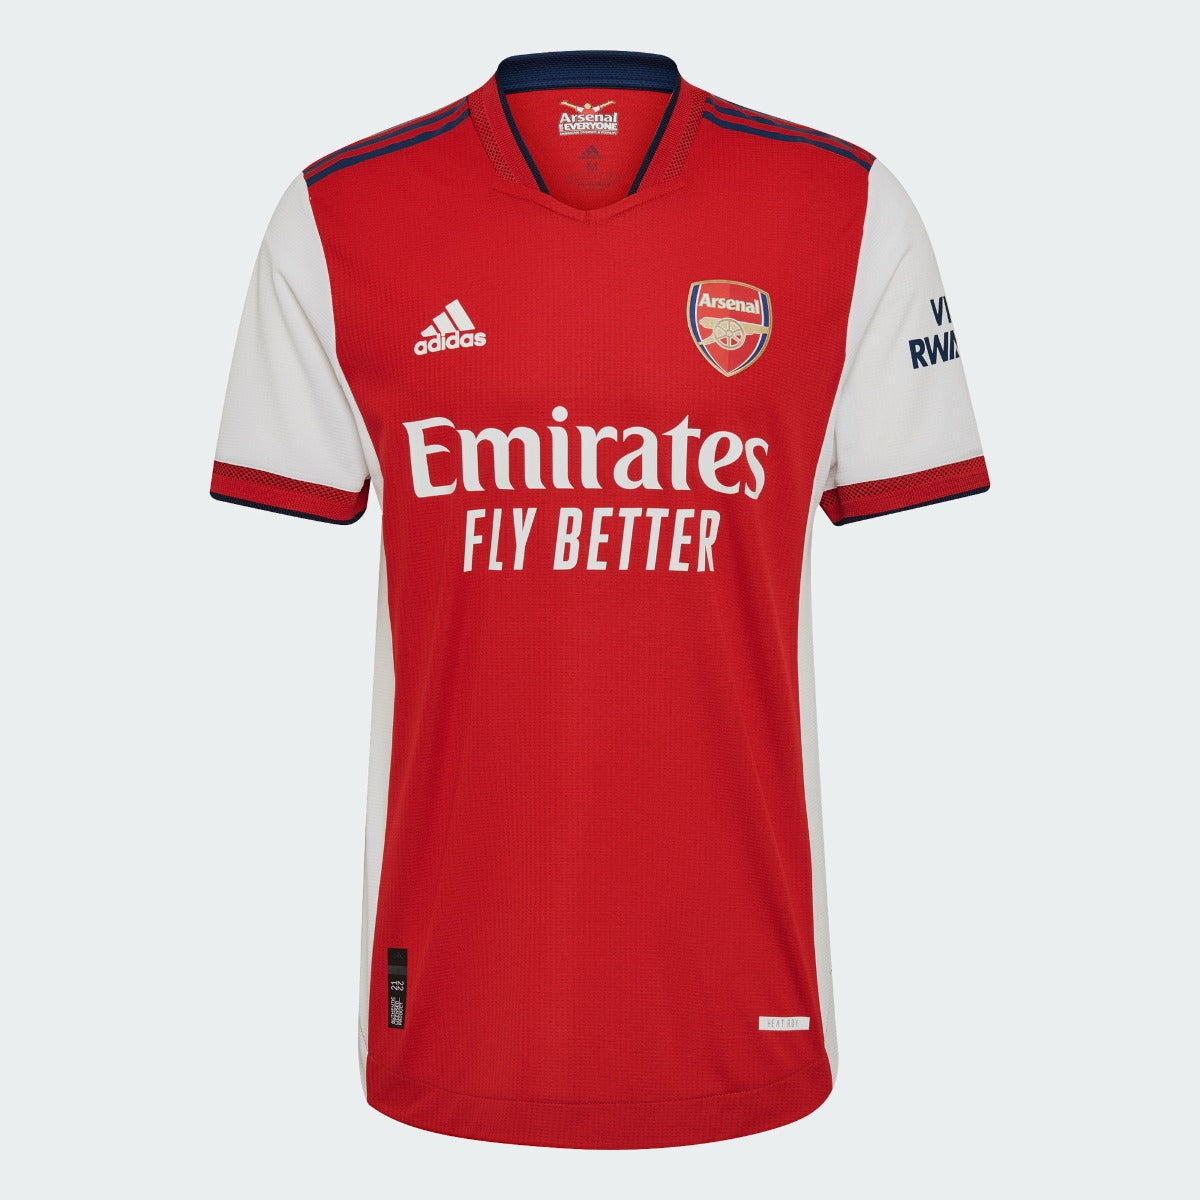 Adidas, Maglia autentica Adidas 2021-22 Arsenal Home - Scarlet-Bianco